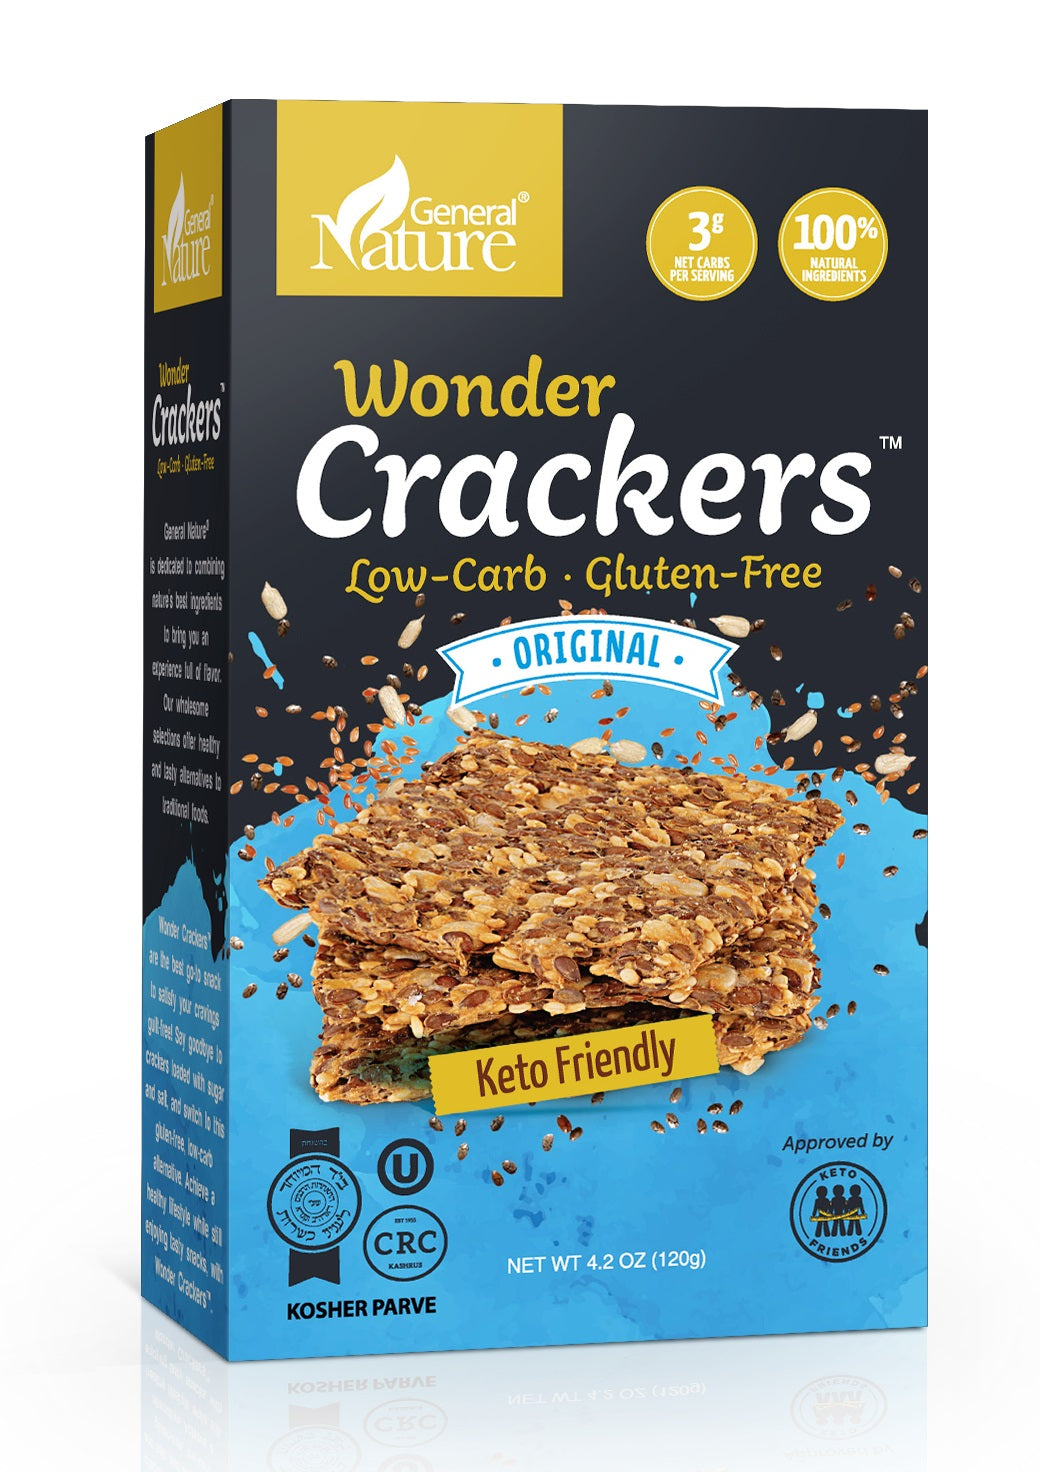 General Nature Low-Carb, Gluten-Free Wonder Crackers, Original, 4.2oz - Multi-Pack